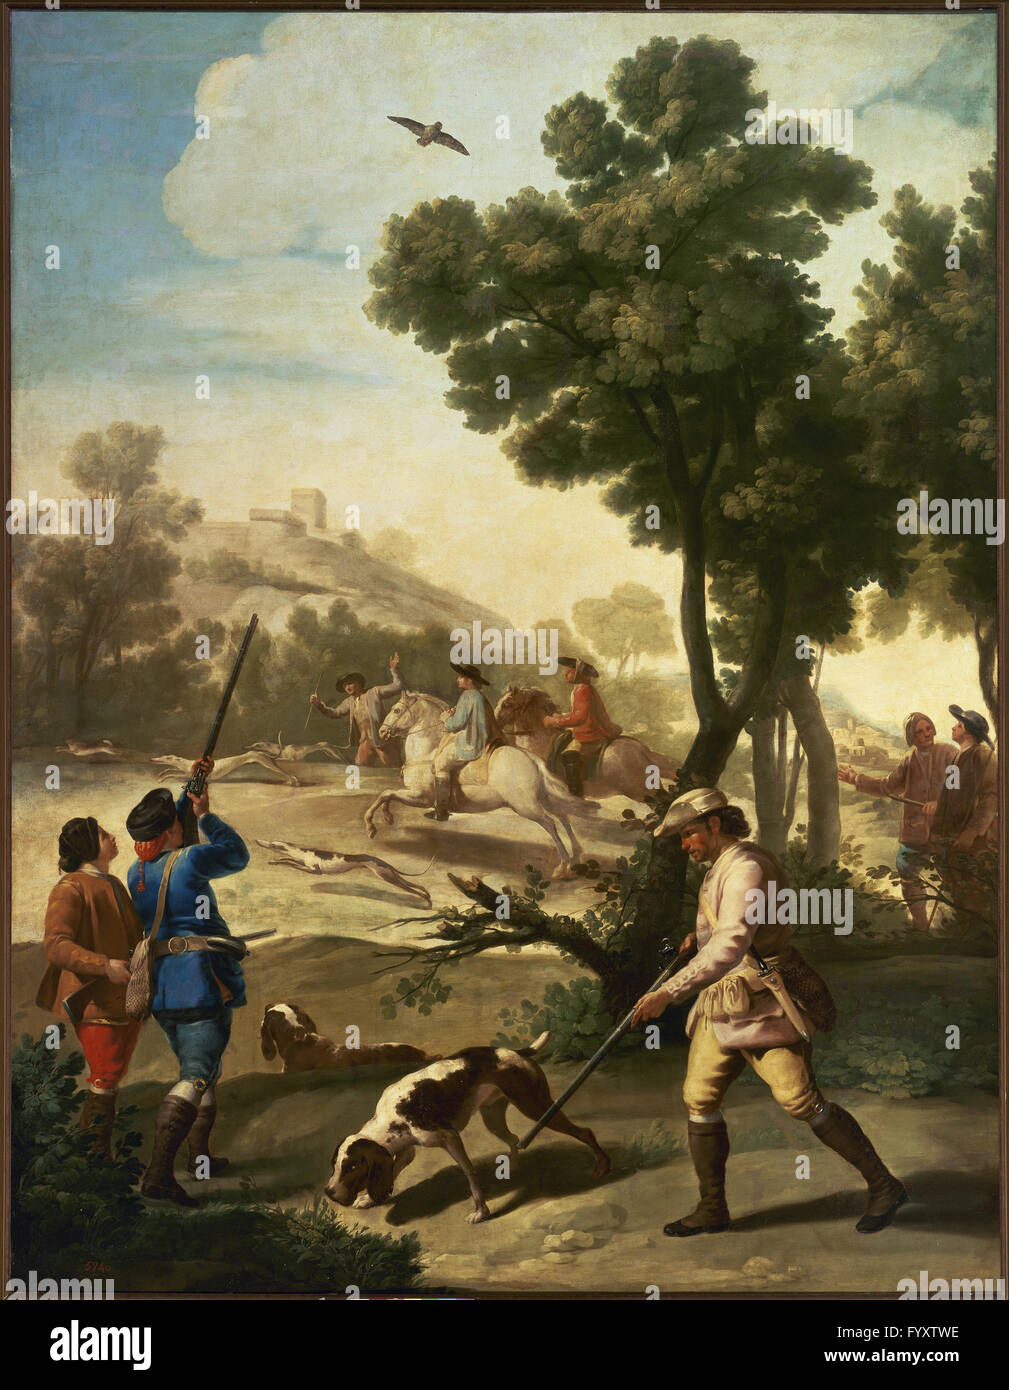 Francisco de Goya y Lucientes (1746-1828). Spanischer Maler. Jagdgesellschaft, 1775. Prado-Museum. Madrid. Spanien. Stockfoto